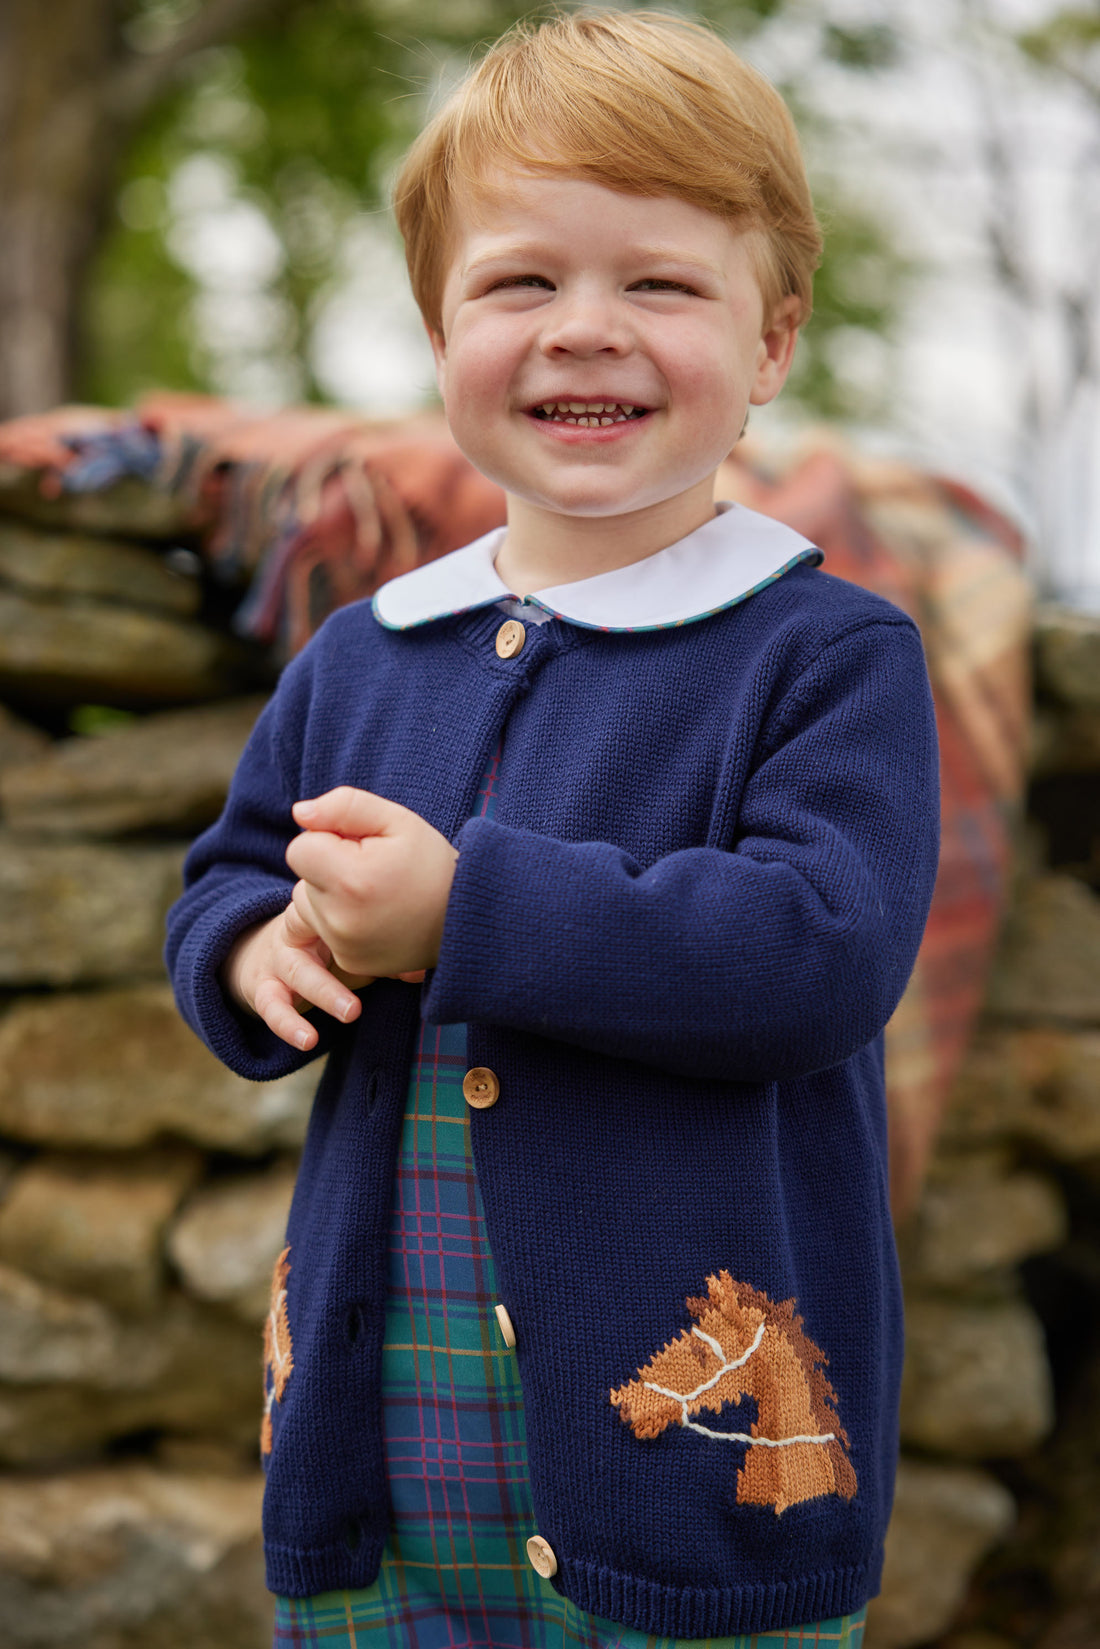 Little English classic toddler boy button tab john john set in ashford tartan pattern with wood buttons on shoulder